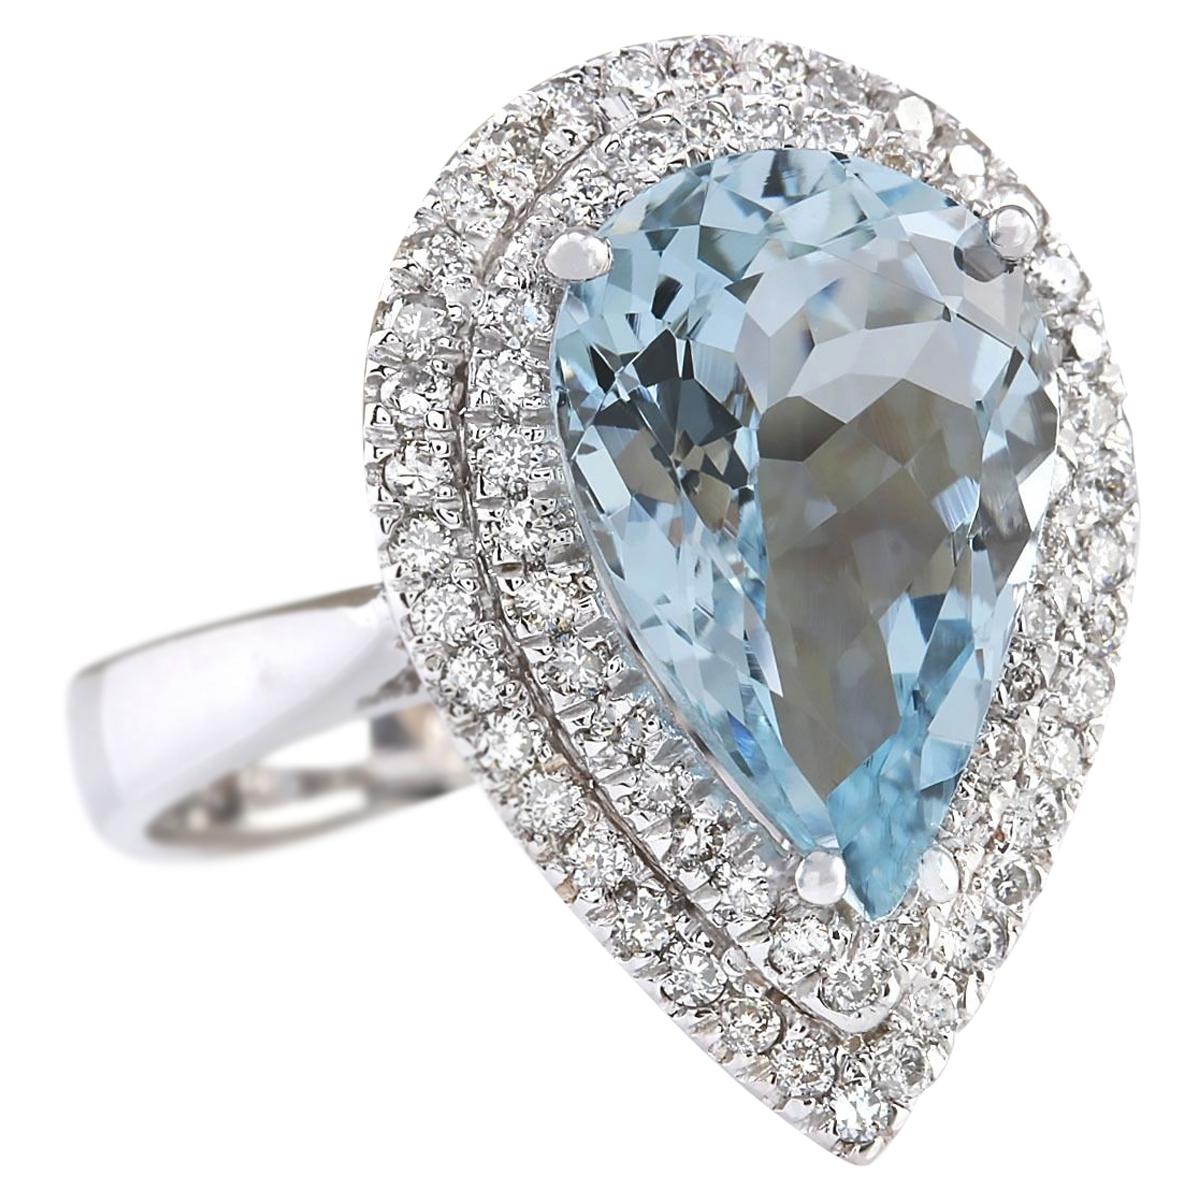 5.37 Carat Natural Aquamarine 14 Karat White Gold Diamond Ring
Stamped: 14K White Gold
Total Ring Weight: 7.5 Grams
Total Natural Aquamarine Weight is 4.62 Carat (Measures: 14.00x10.00 mm)
Color: Blue
Total Natural Diamond Weight is 0.75